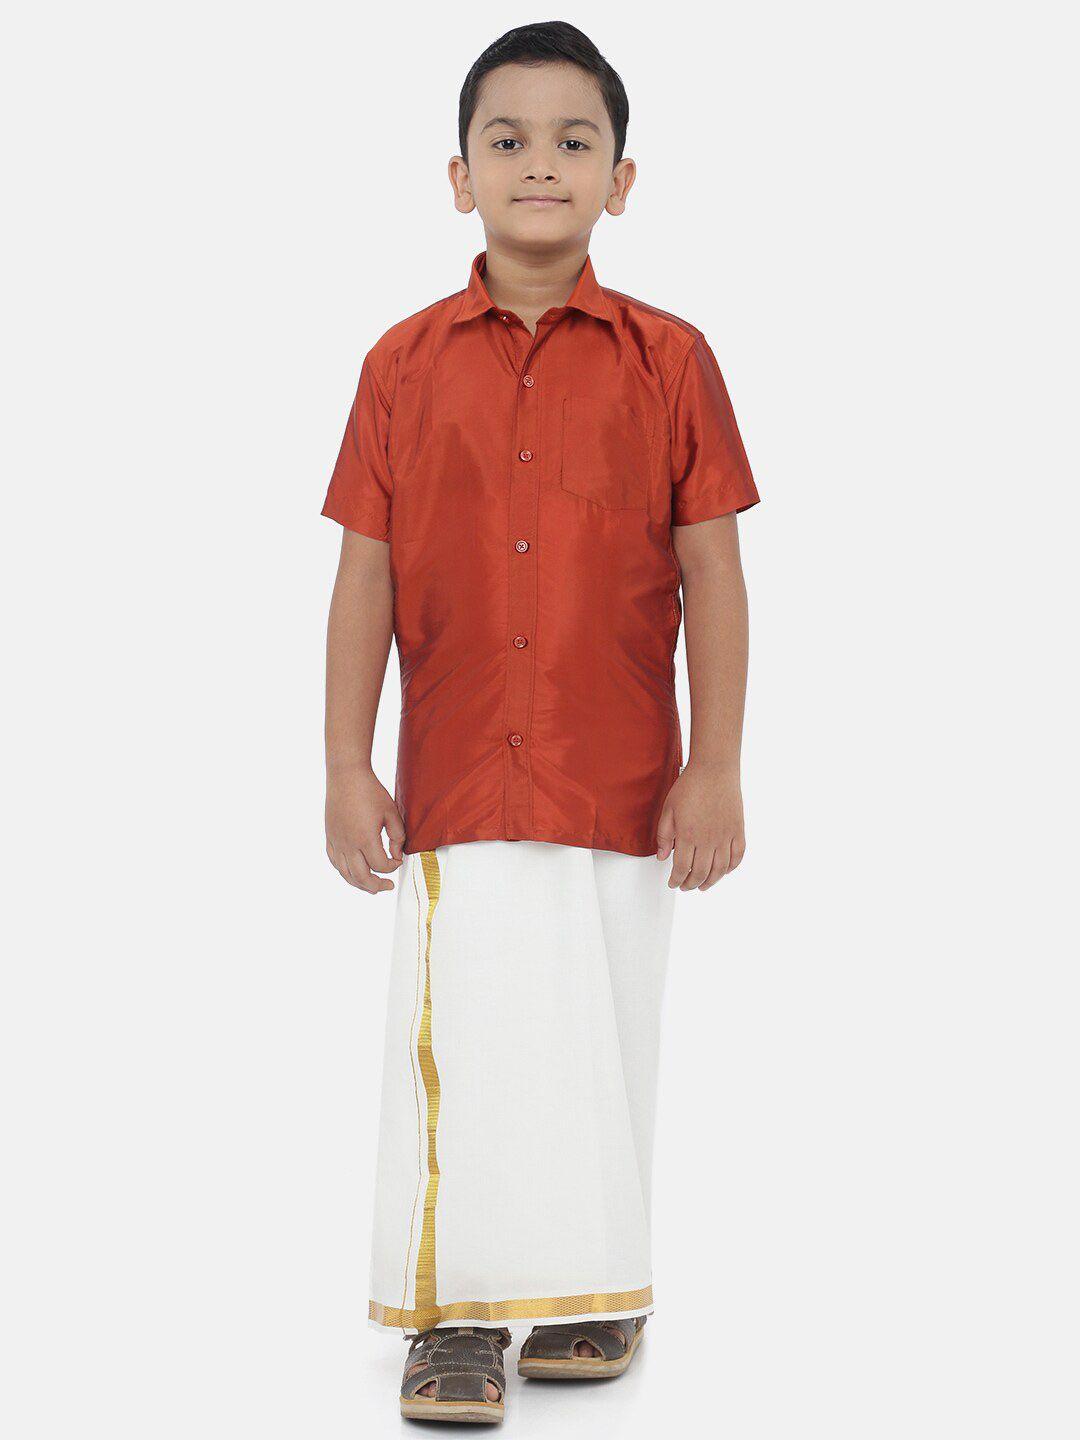 littlestars boys orange & white shirt with dhotis